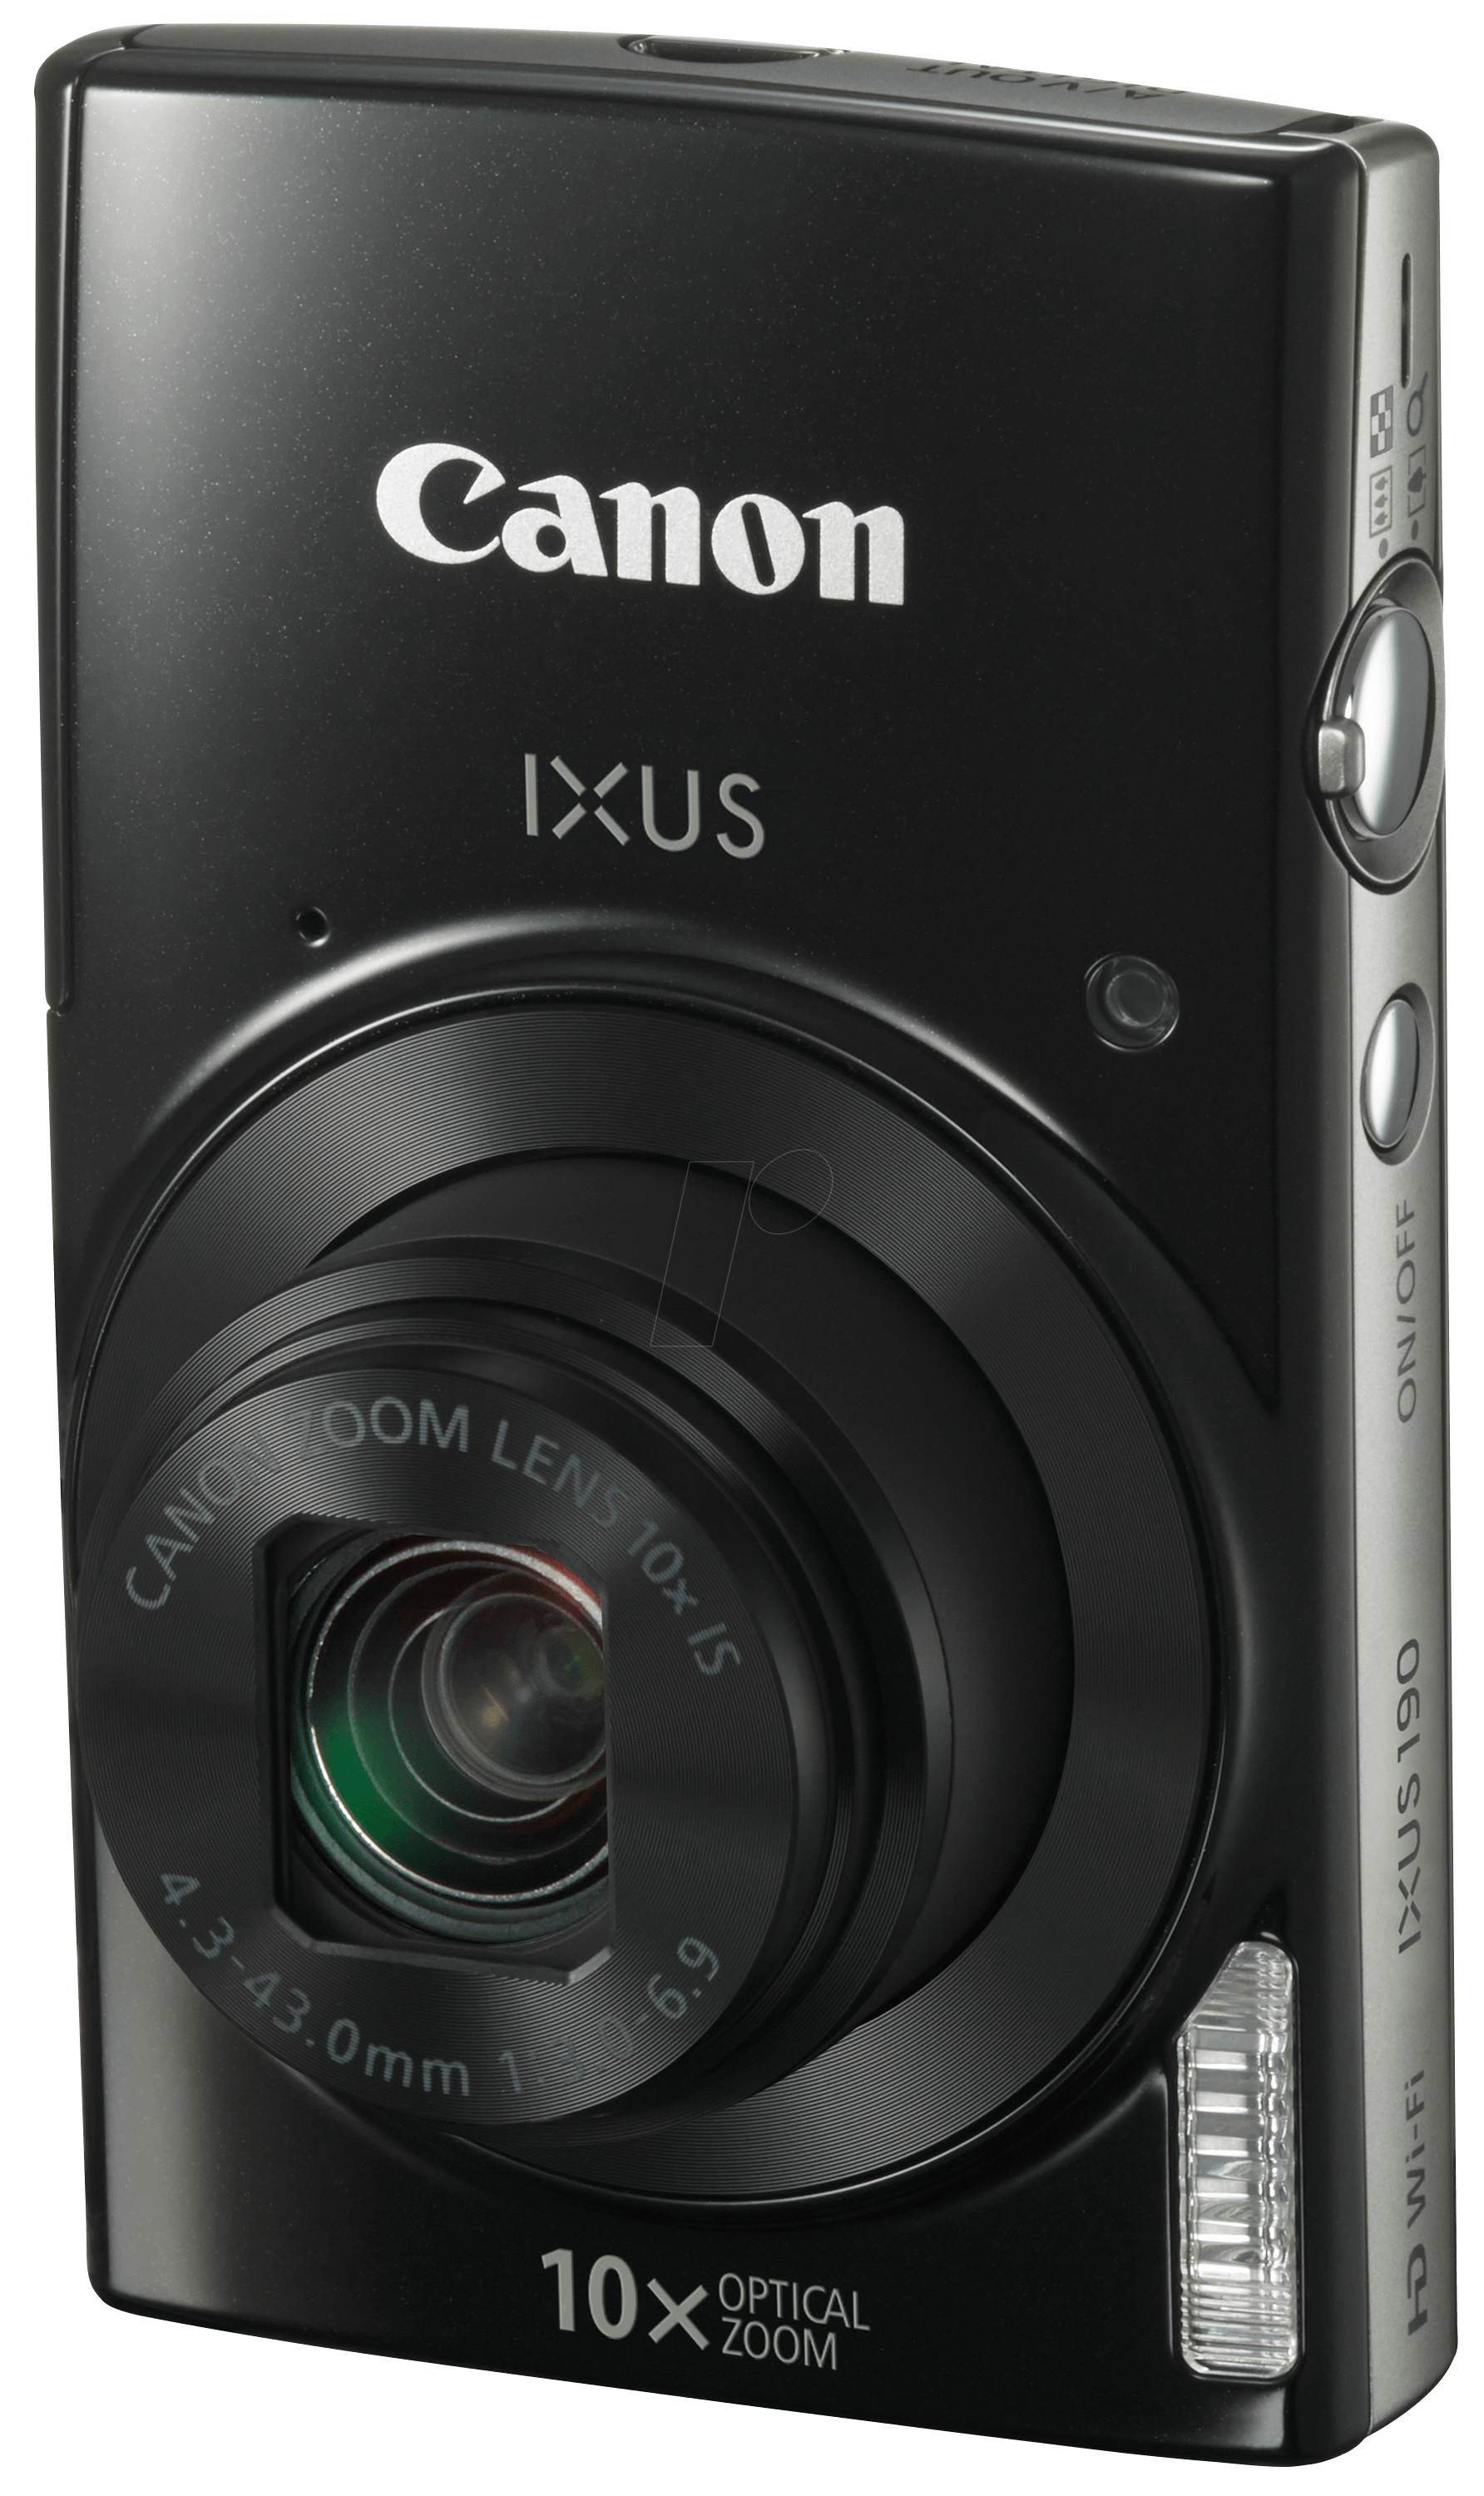 Canon Ixus 65 User Manual Pdf